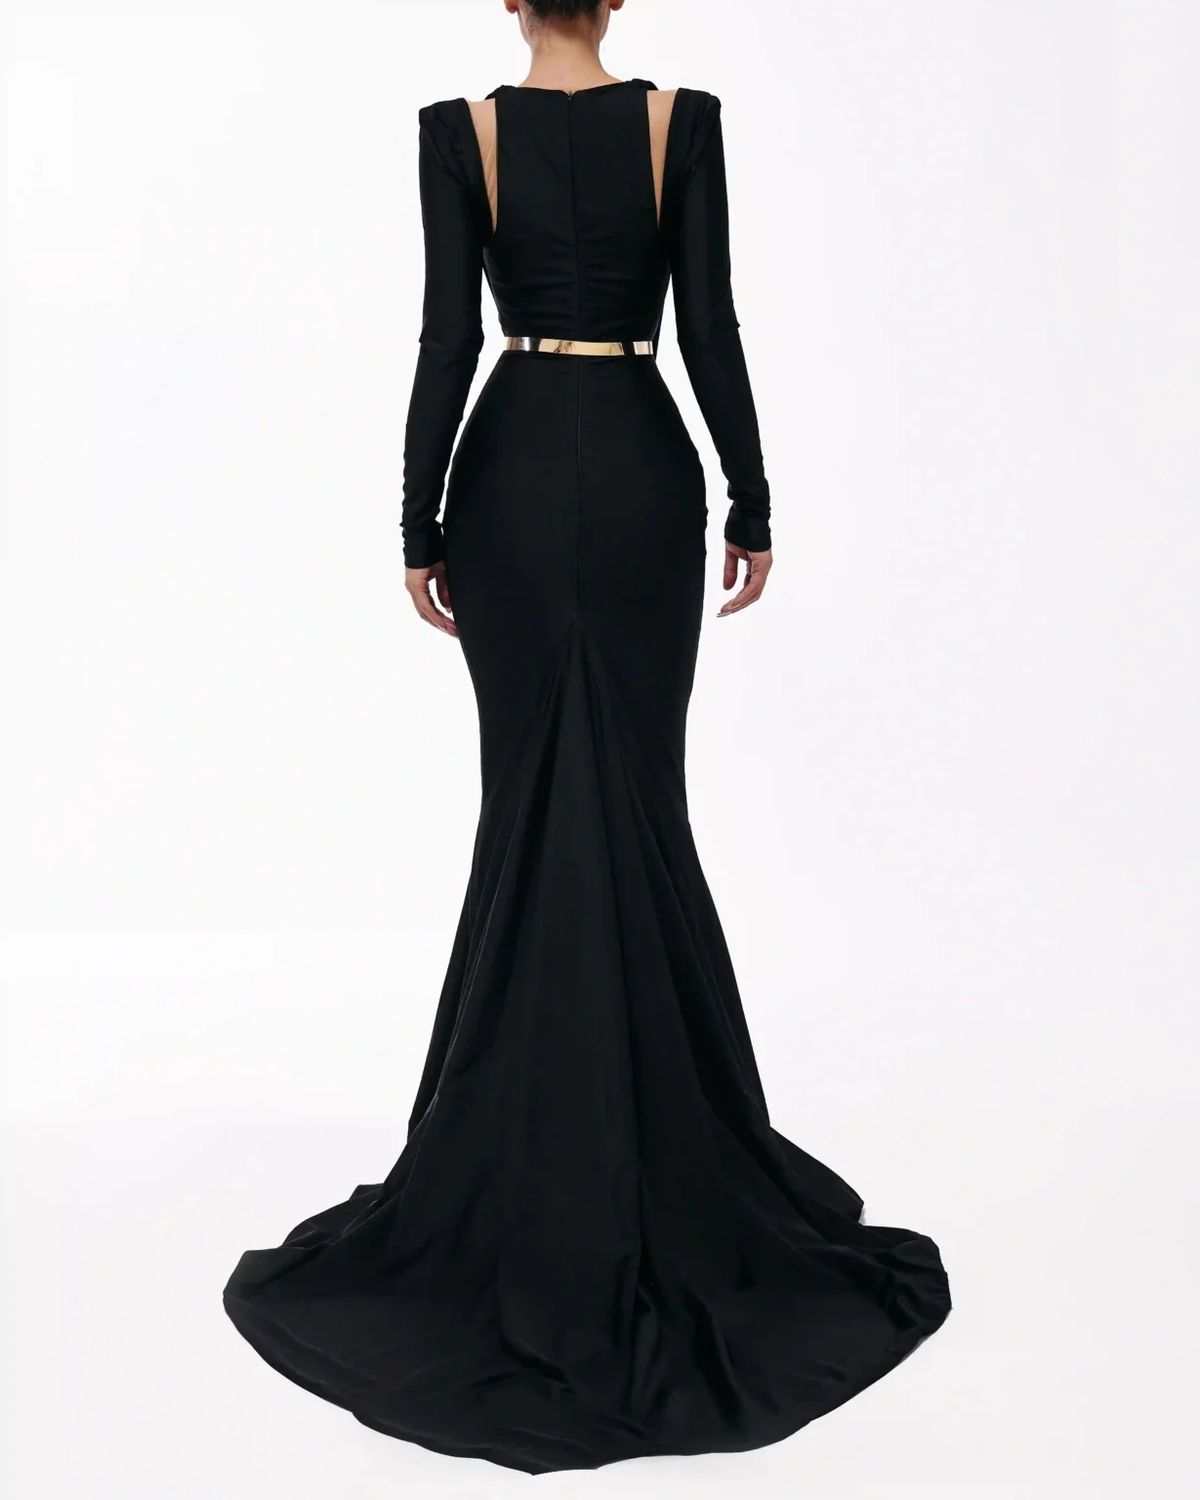 Style euphoria-24-2 Valdrin Sahiti Size S Pageant Black Mermaid Dress on Queenly